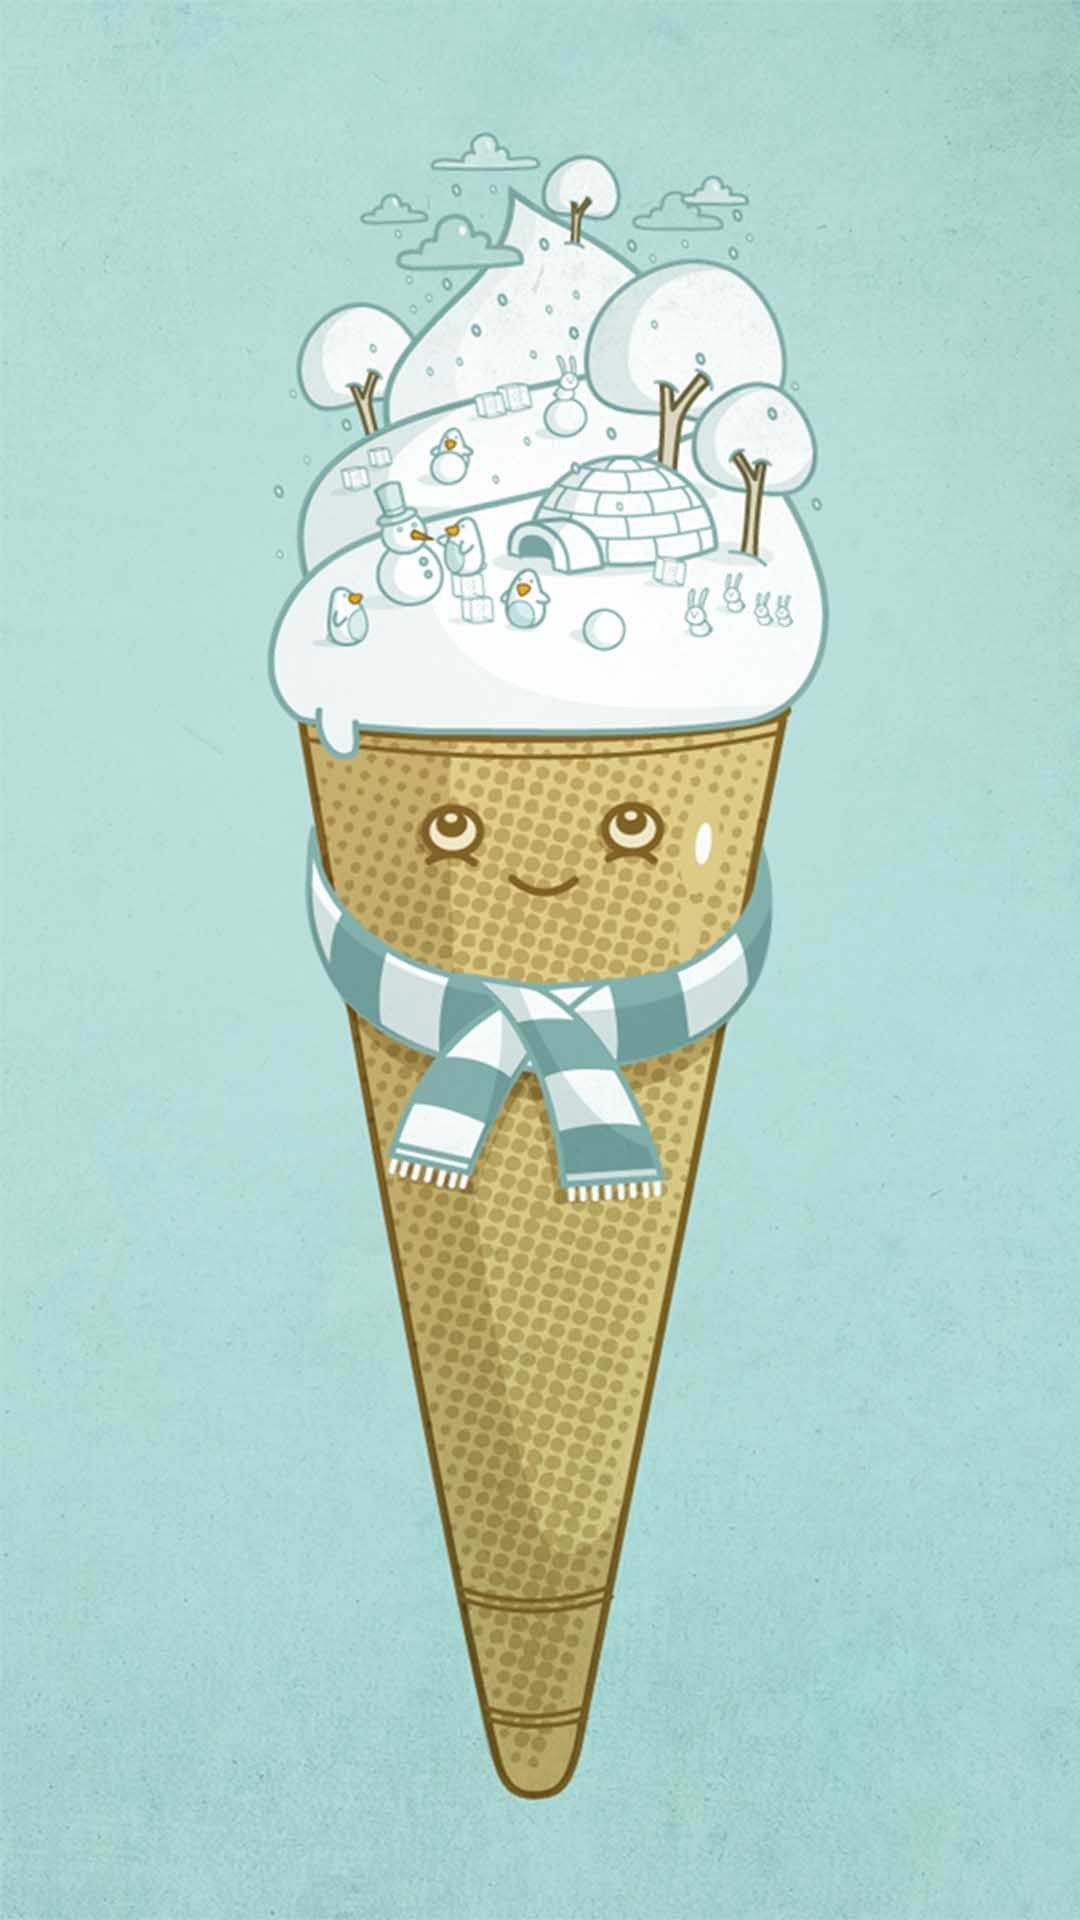 A cartoon ice cream cone with snow on top - Ice cream, funny